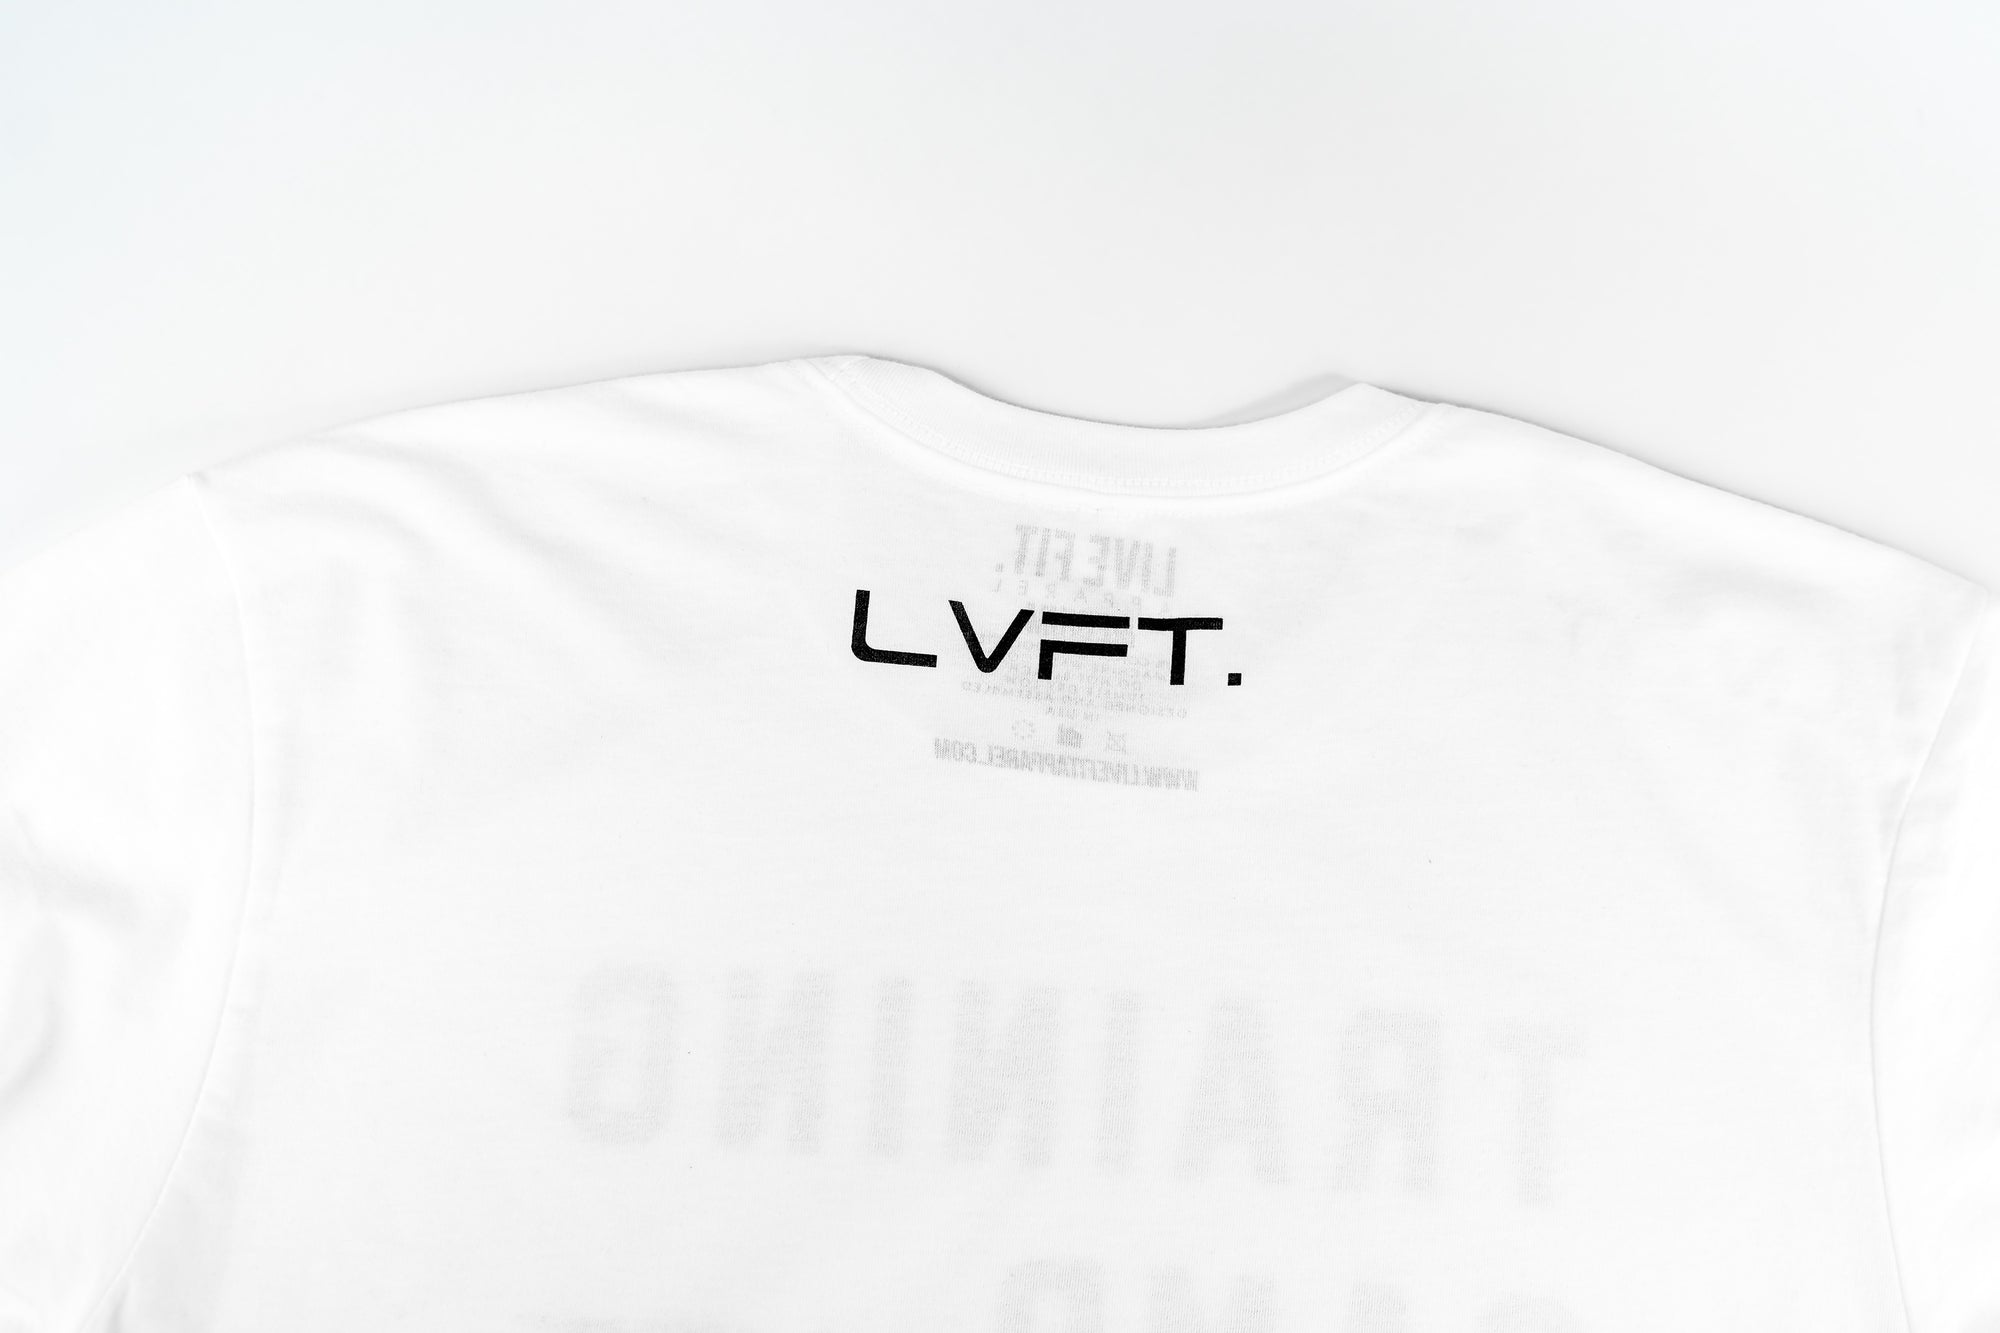 Team Live Fit LVFT International T Shirt L Seafoam Green Gym Training #6210